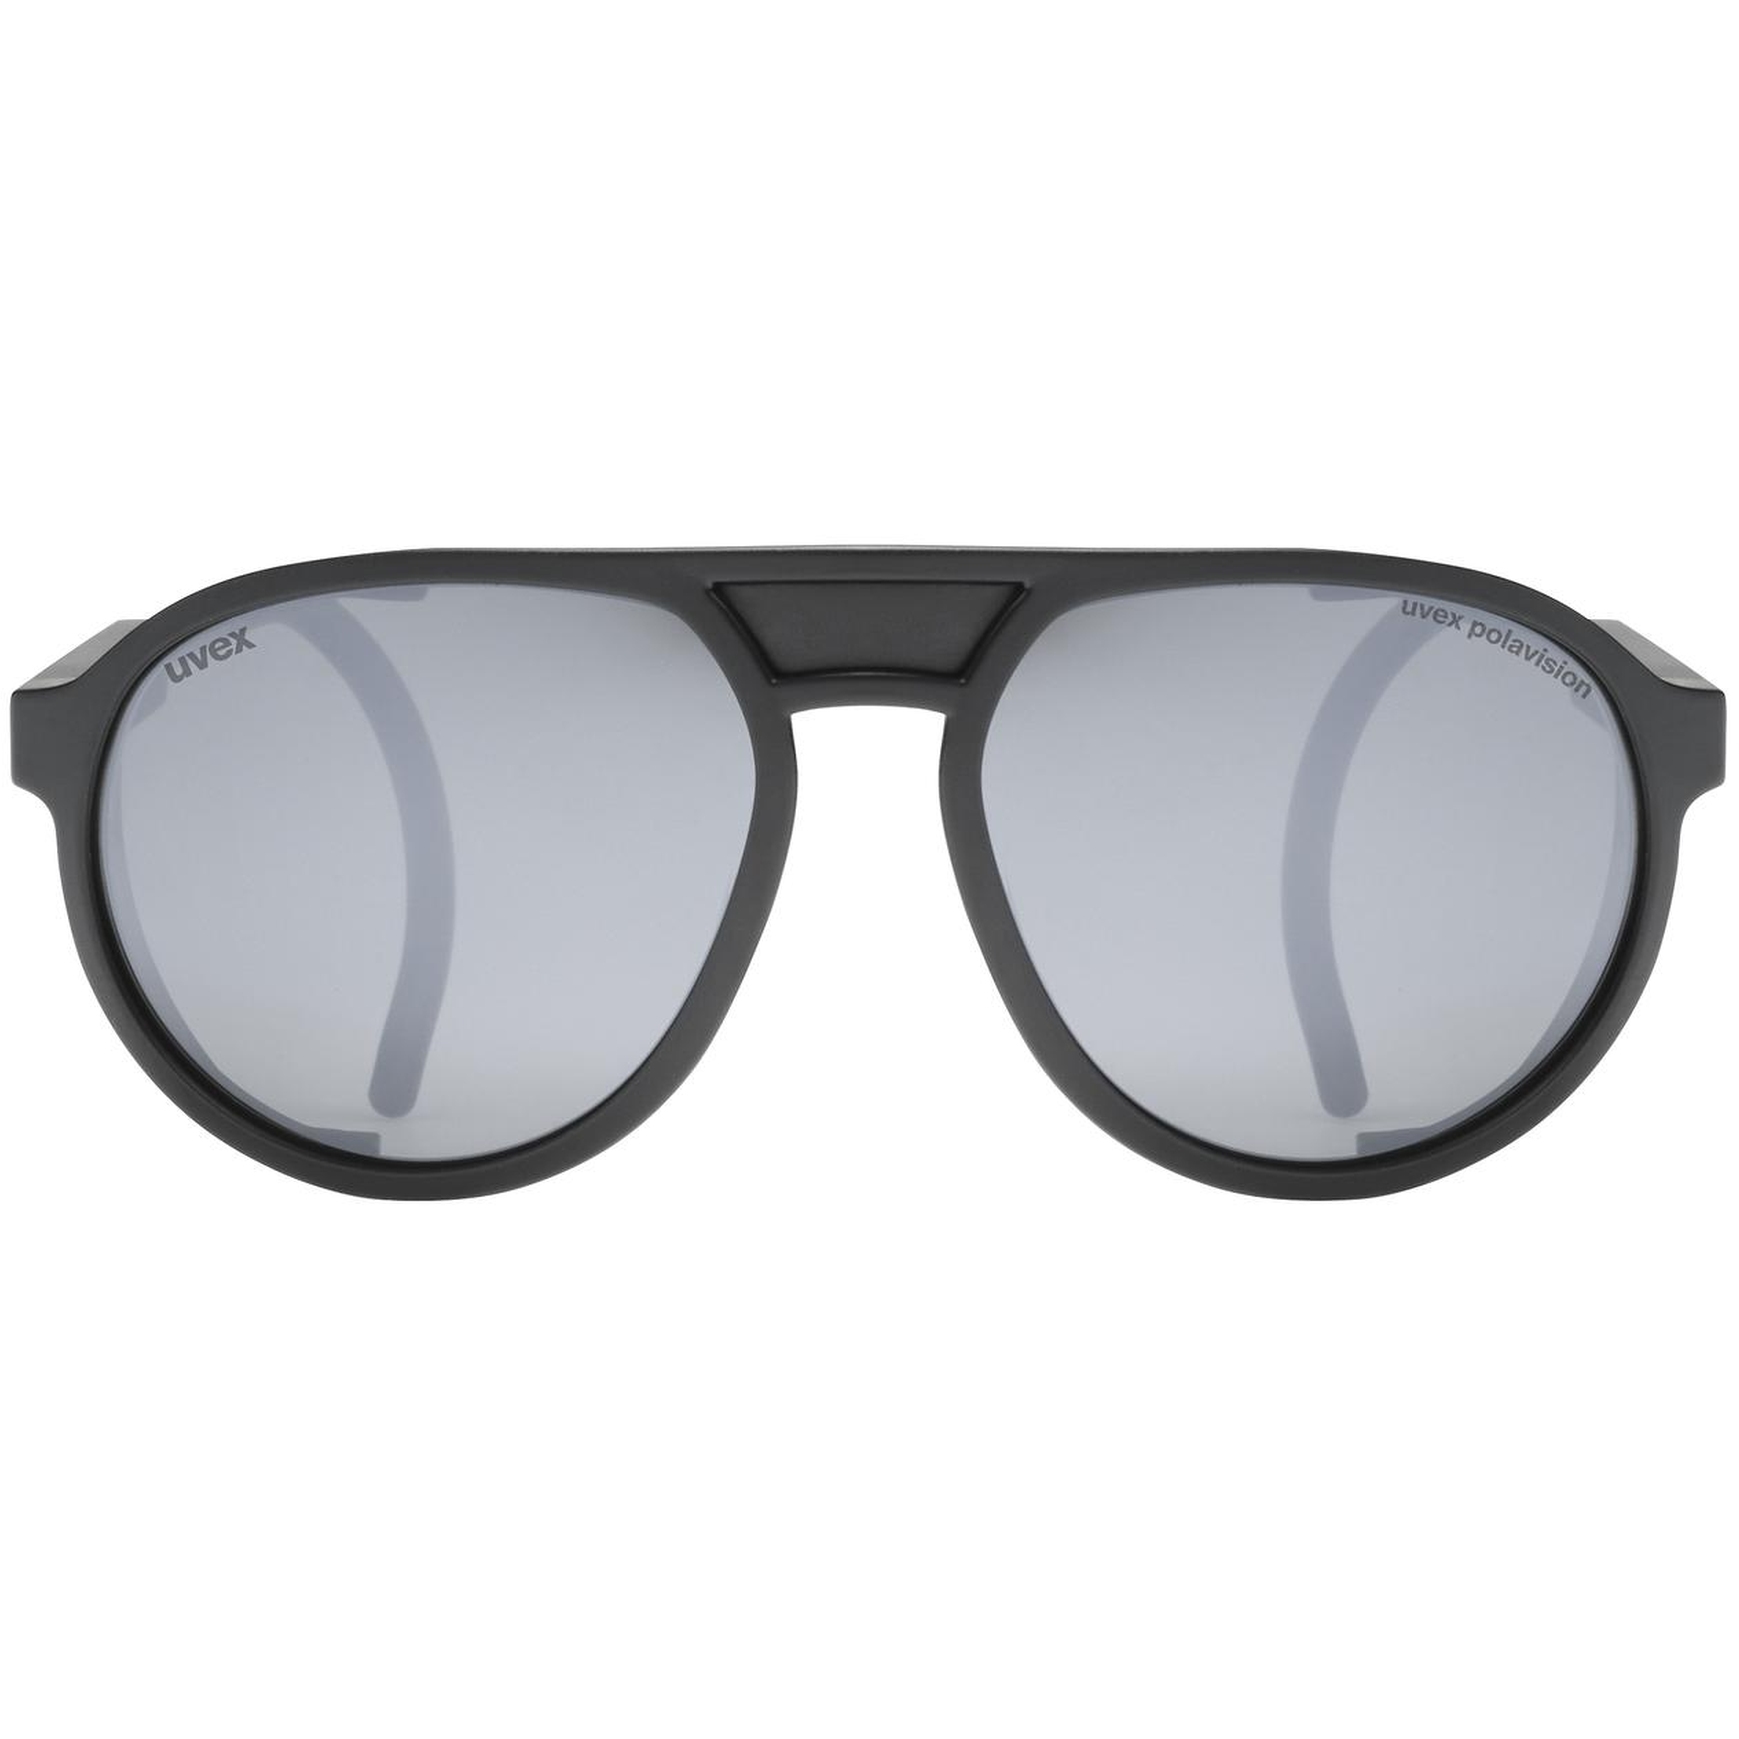 Uvex mtn classic P Glasses - black matt/polavision mirror silver